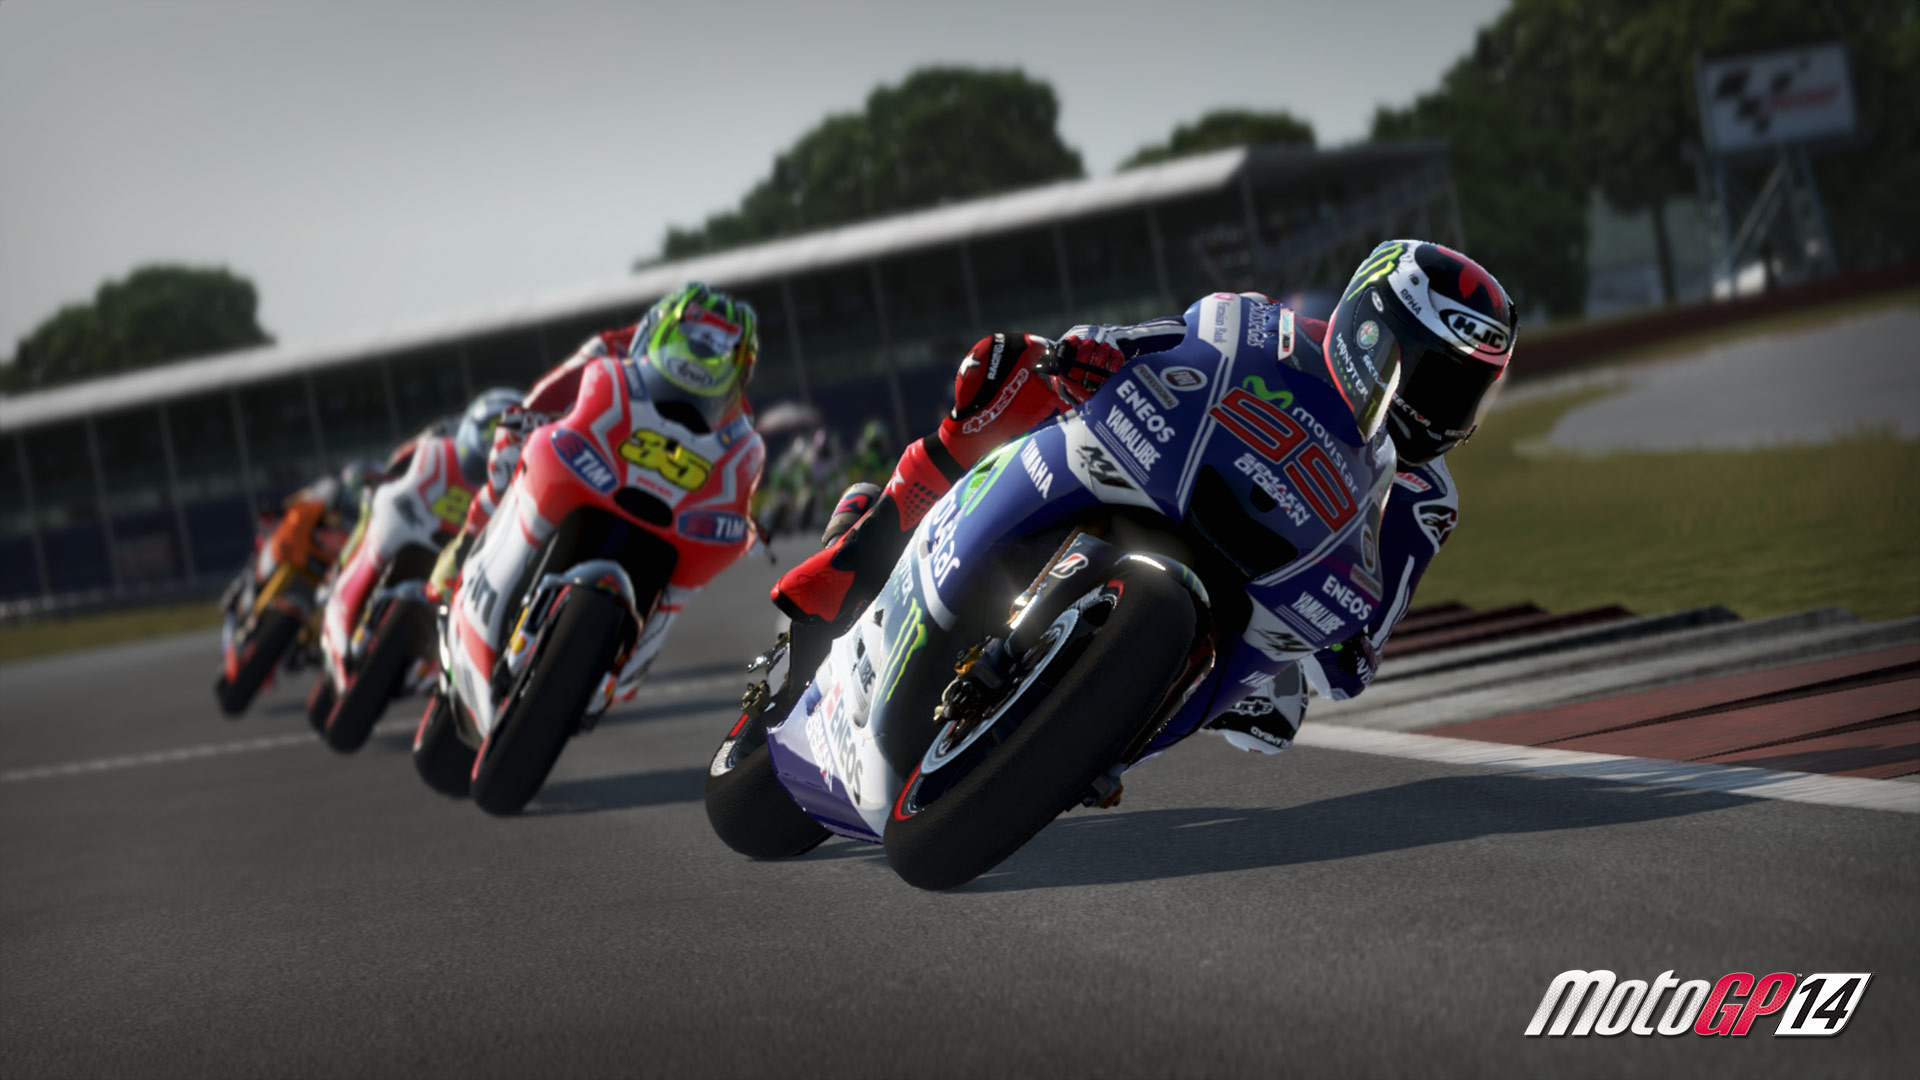 MotoGP 14 (PS Vita / PlayStation Vita) Game Profile News